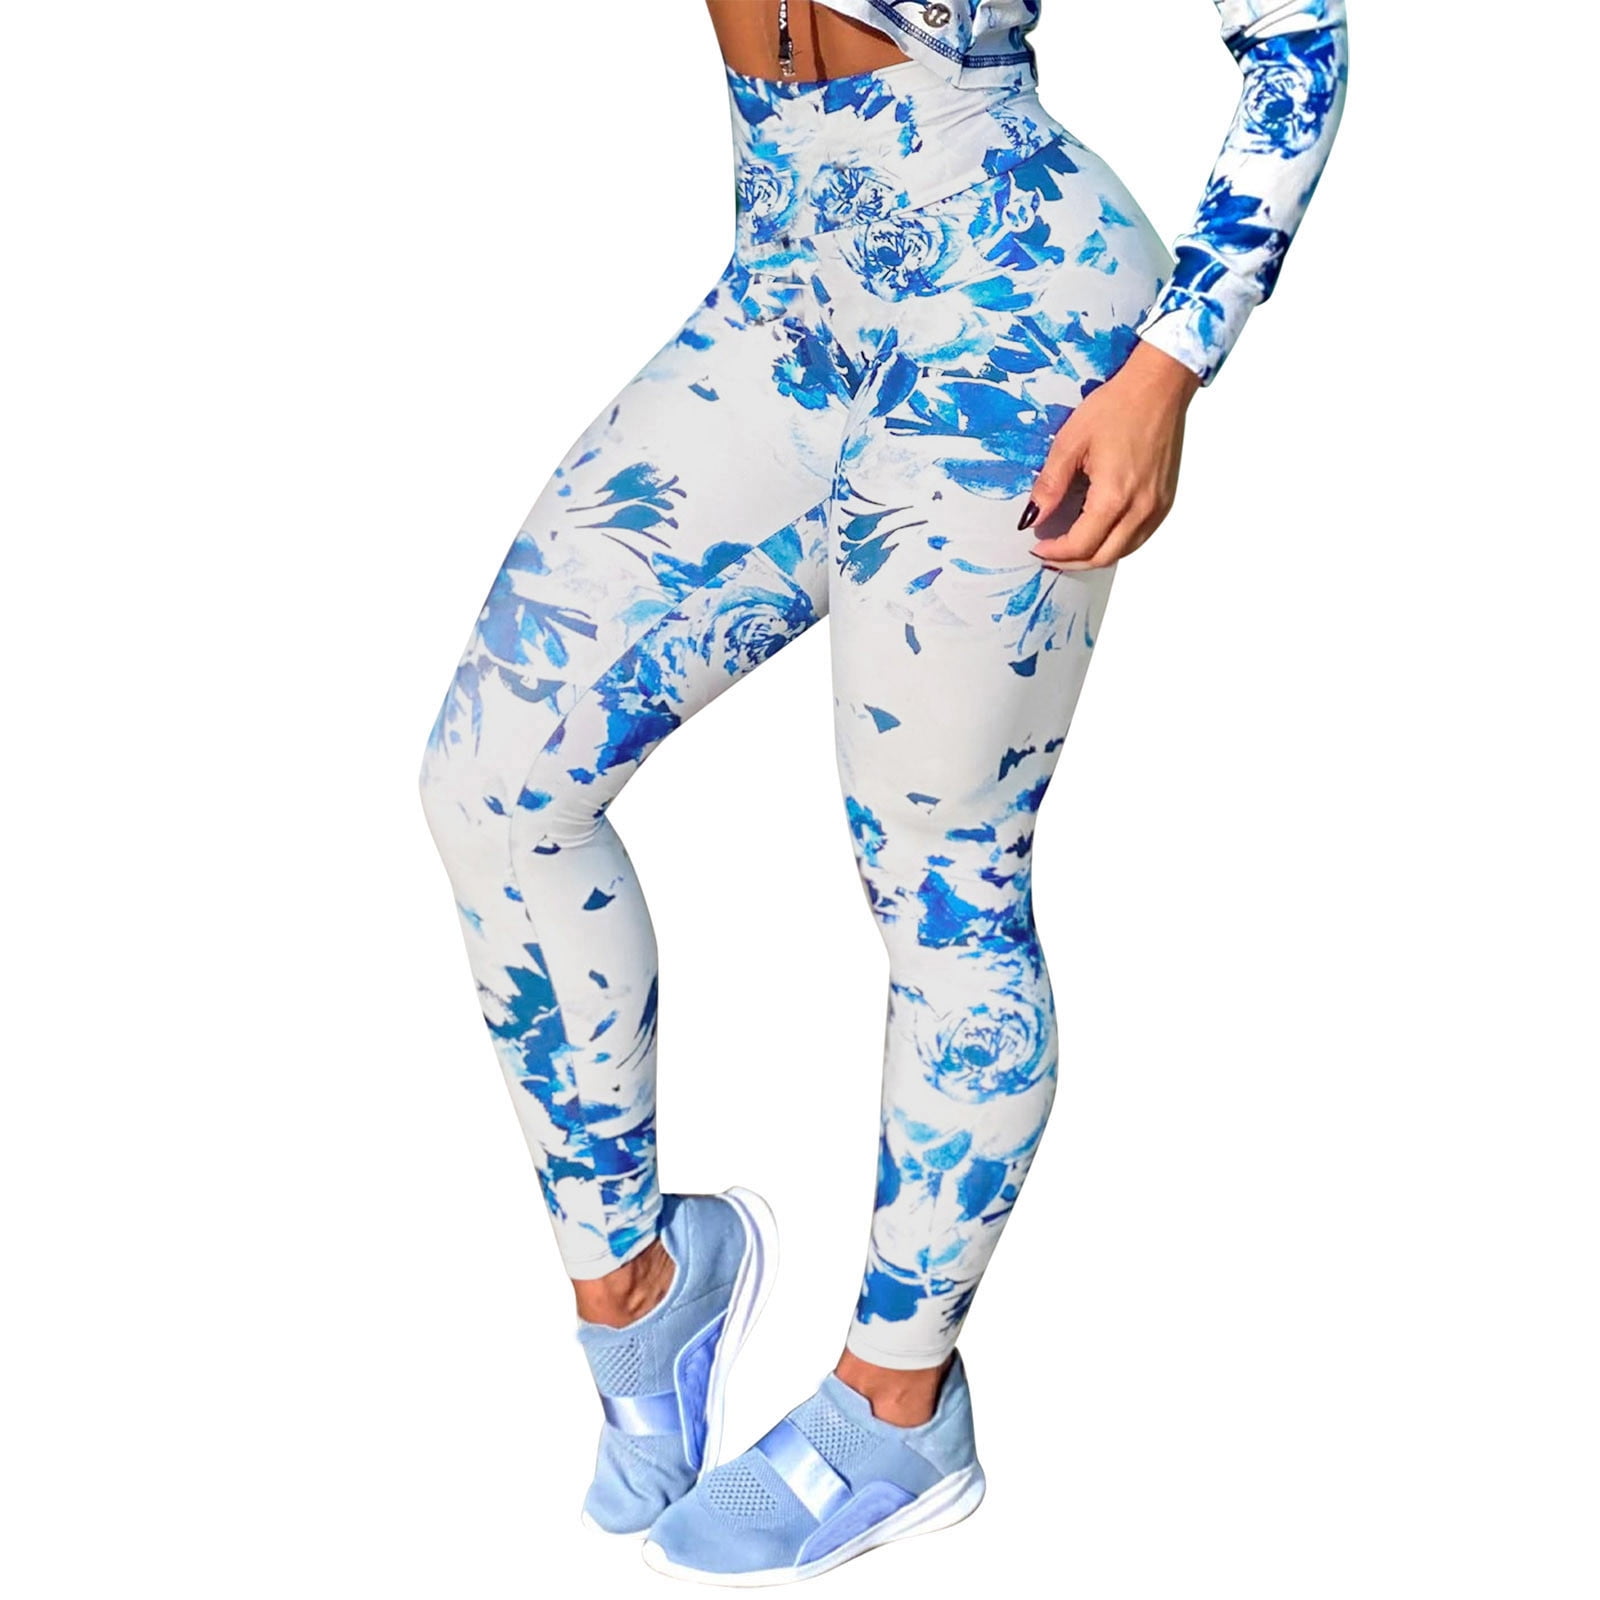 xinqinghao yoga leggings for women womens fashion printed leggings lifting  fitness sports leggings women yoga pants light blue m 